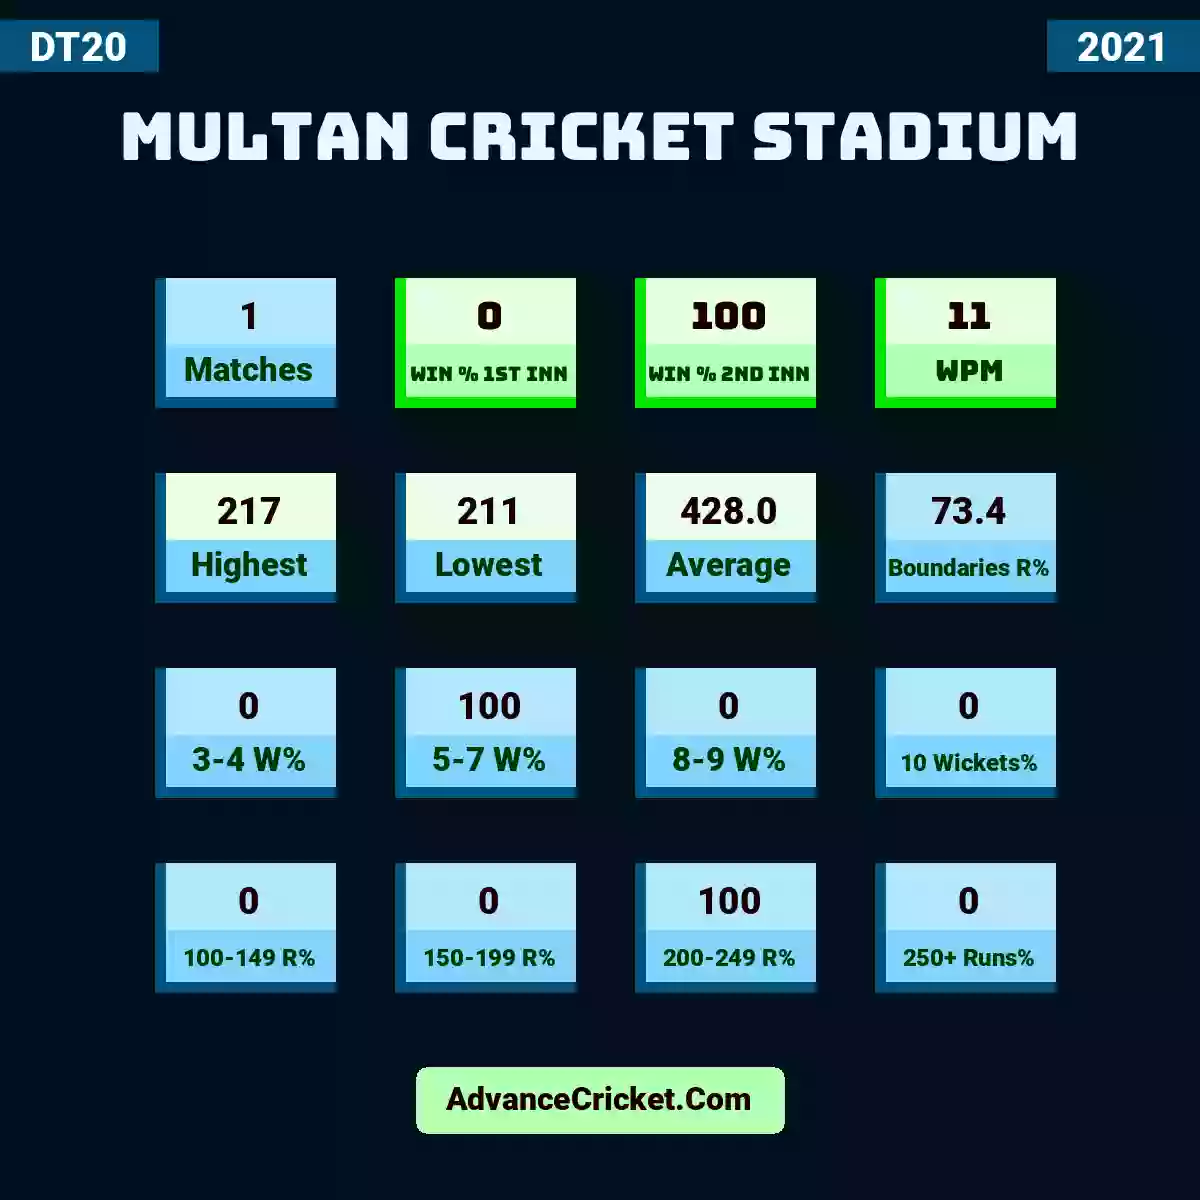 Image showing Multan Cricket Stadium with Matches: 1, Win % 1st Inn: 0, Win % 2nd Inn: 100, WPM: 11, Highest: 217, Lowest: 211, Average: 428.0, Boundaries R%: 73.4, 3-4 W%: 0, 5-7 W%: 100, 8-9 W%: 0, 10 Wickets%: 0, 100-149 R%: 0, 150-199 R%: 0, 200-249 R%: 100, 250+ Runs%: 0.